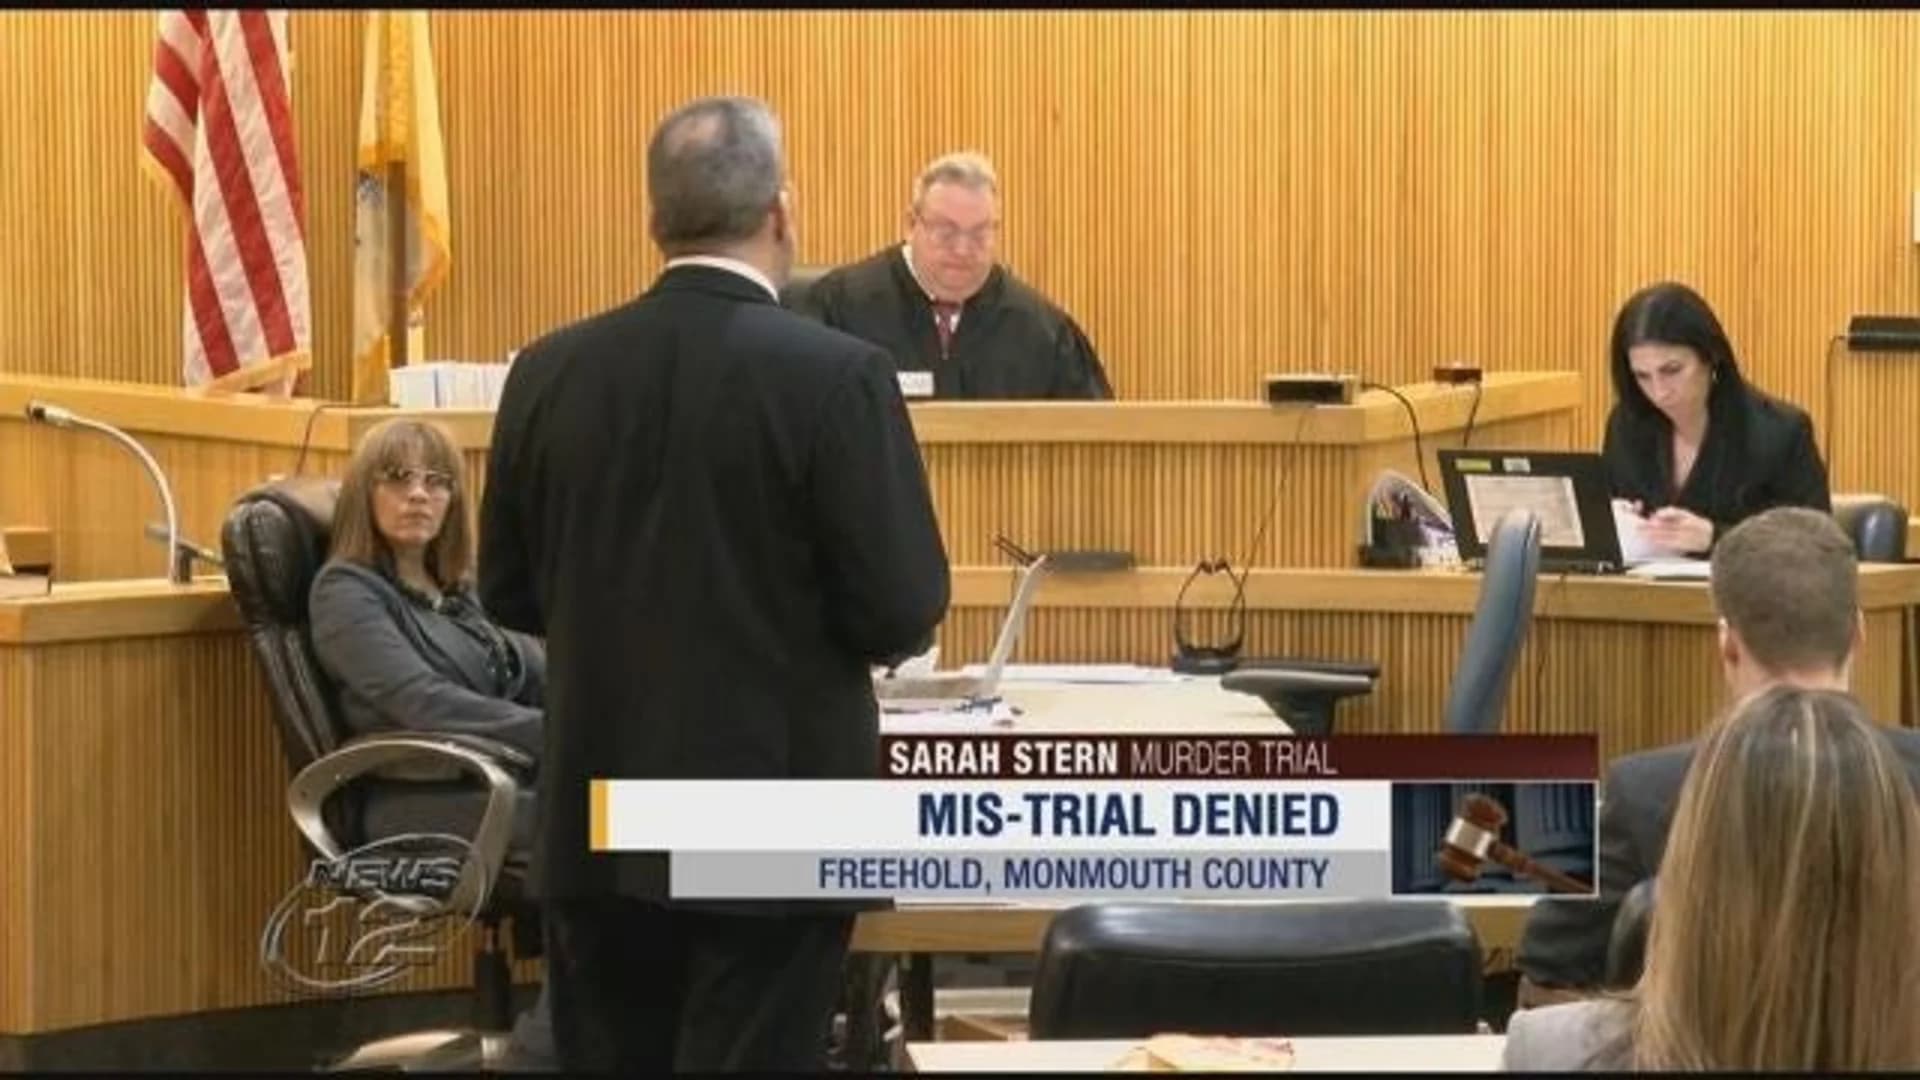 Judge dismisses 2nd juror; denies mistrial request in Sarah Stern murder trial